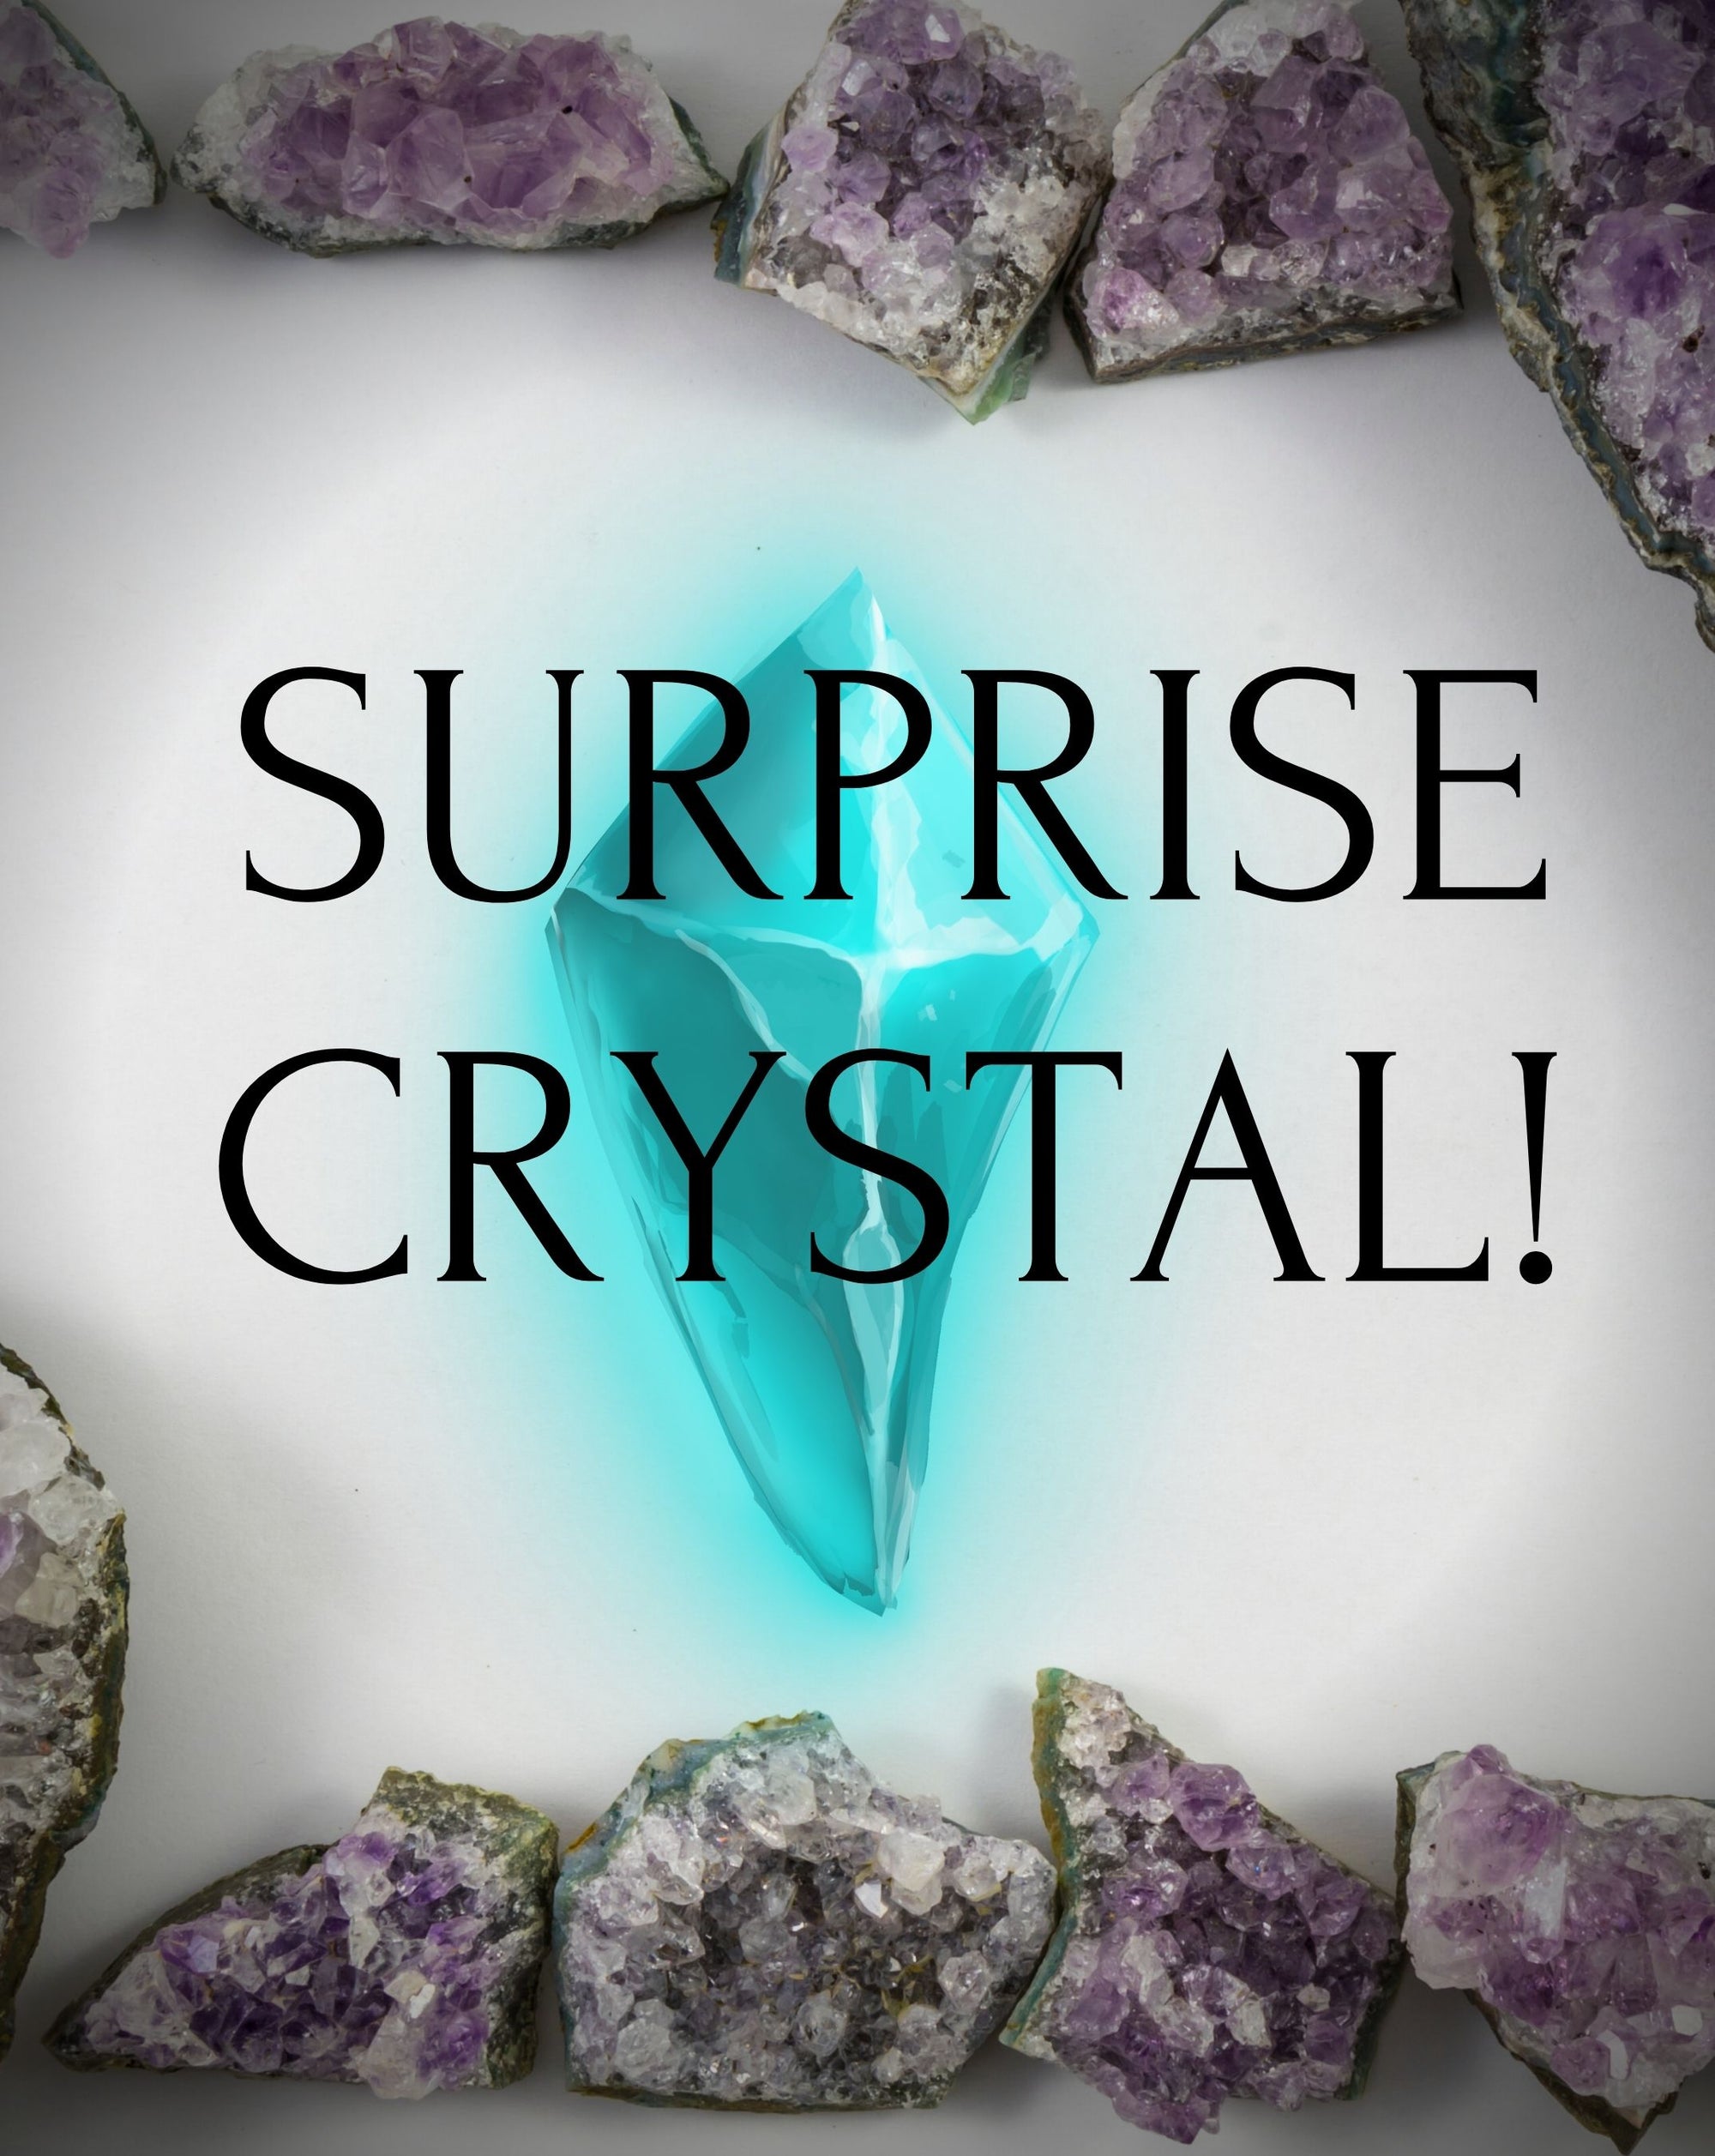 Surprise Crystal!